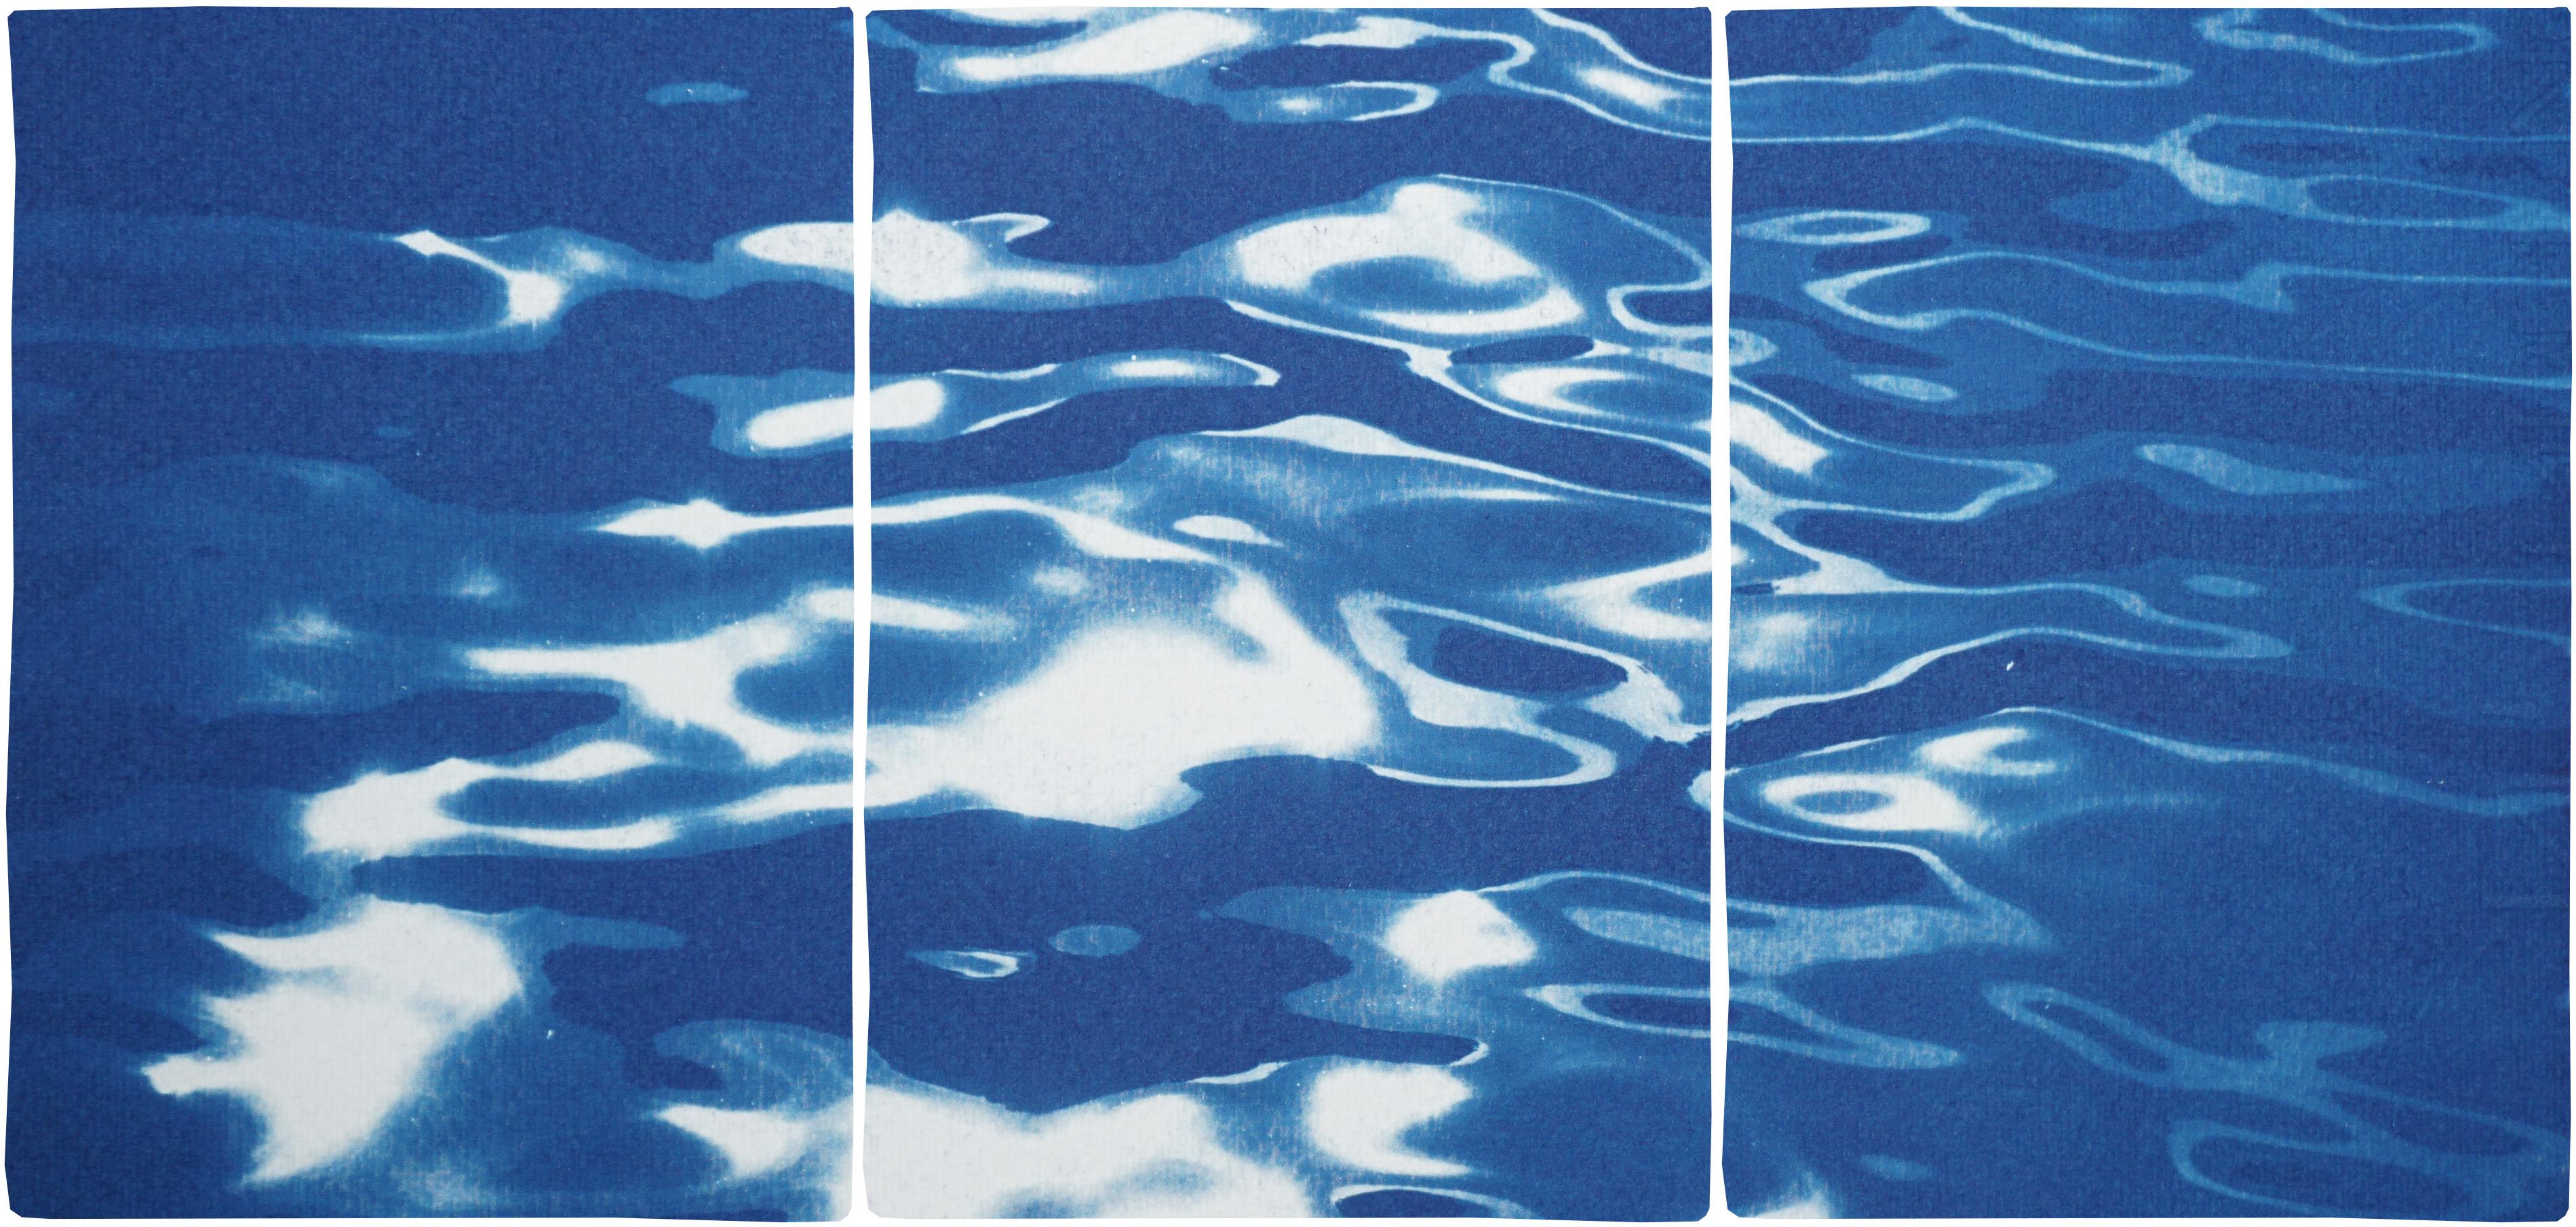 Kind of Cyan Landscape Print - Lido Island Reflections, Venice Landscape Blue Tones, Minimal Cyanotype Print 